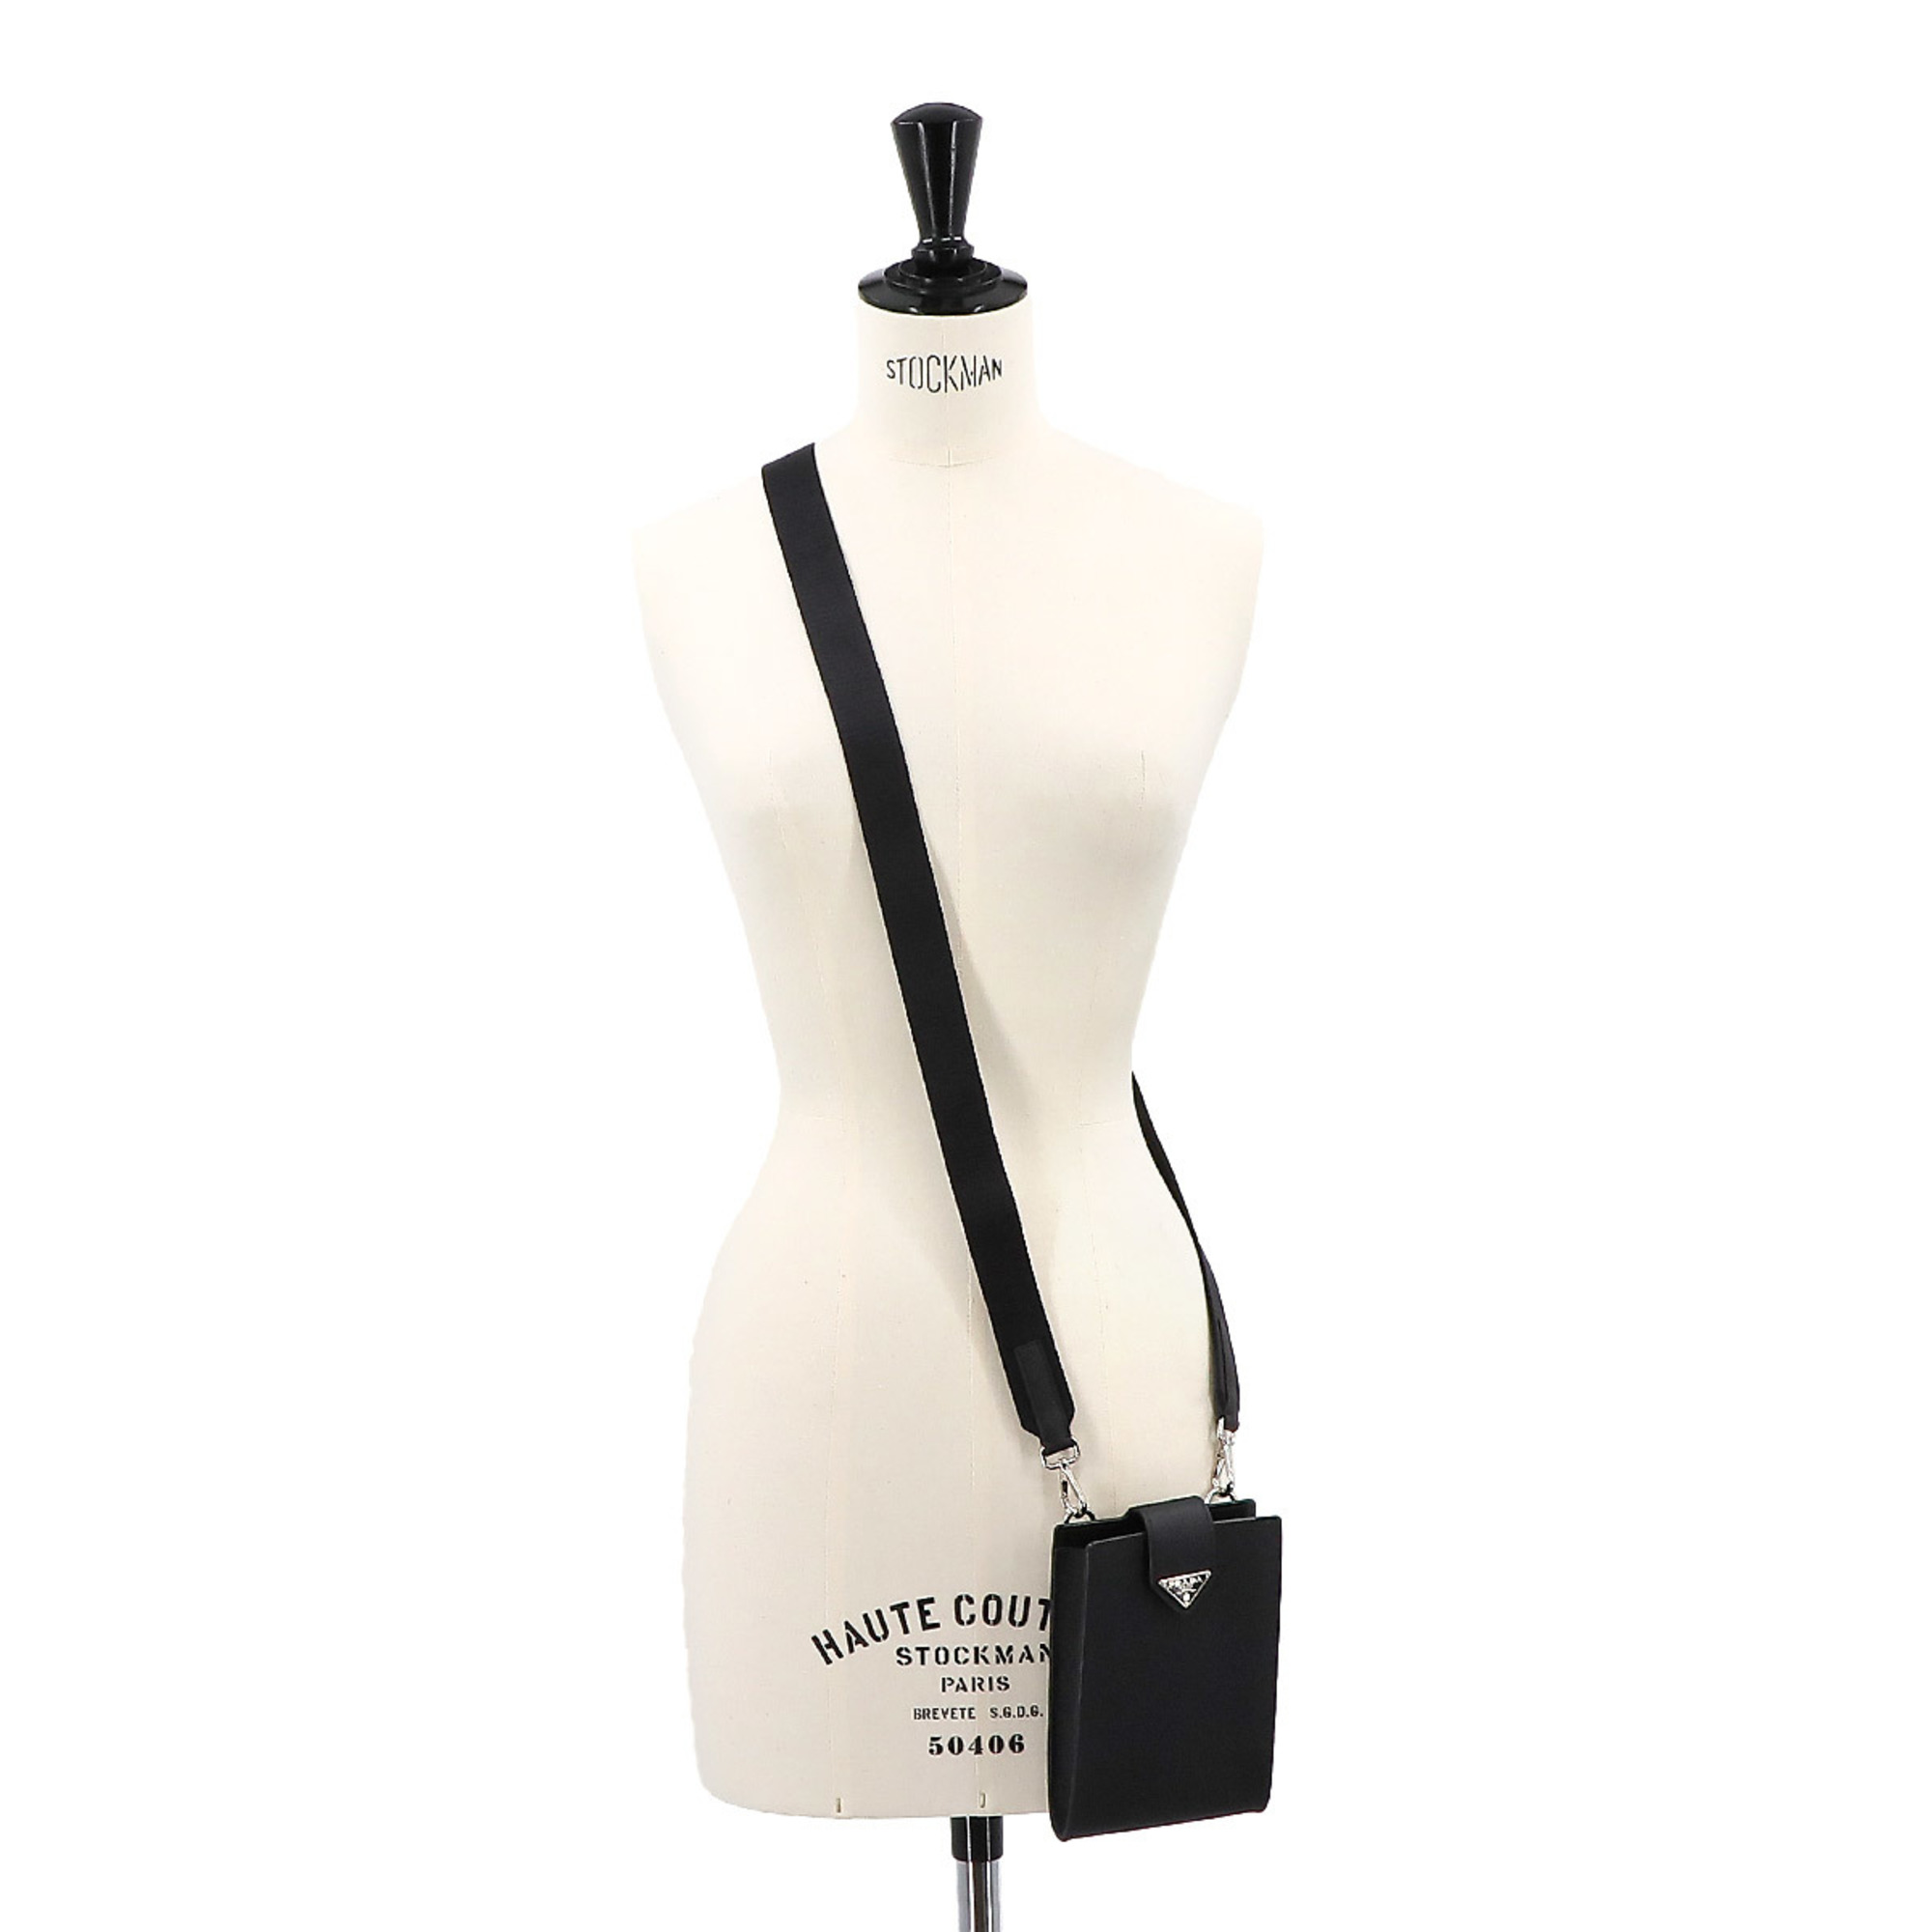 PRADA Saffiano Smartphone Case Shoulder Bag Leather Nero Black 2XH179 Silver Hardware